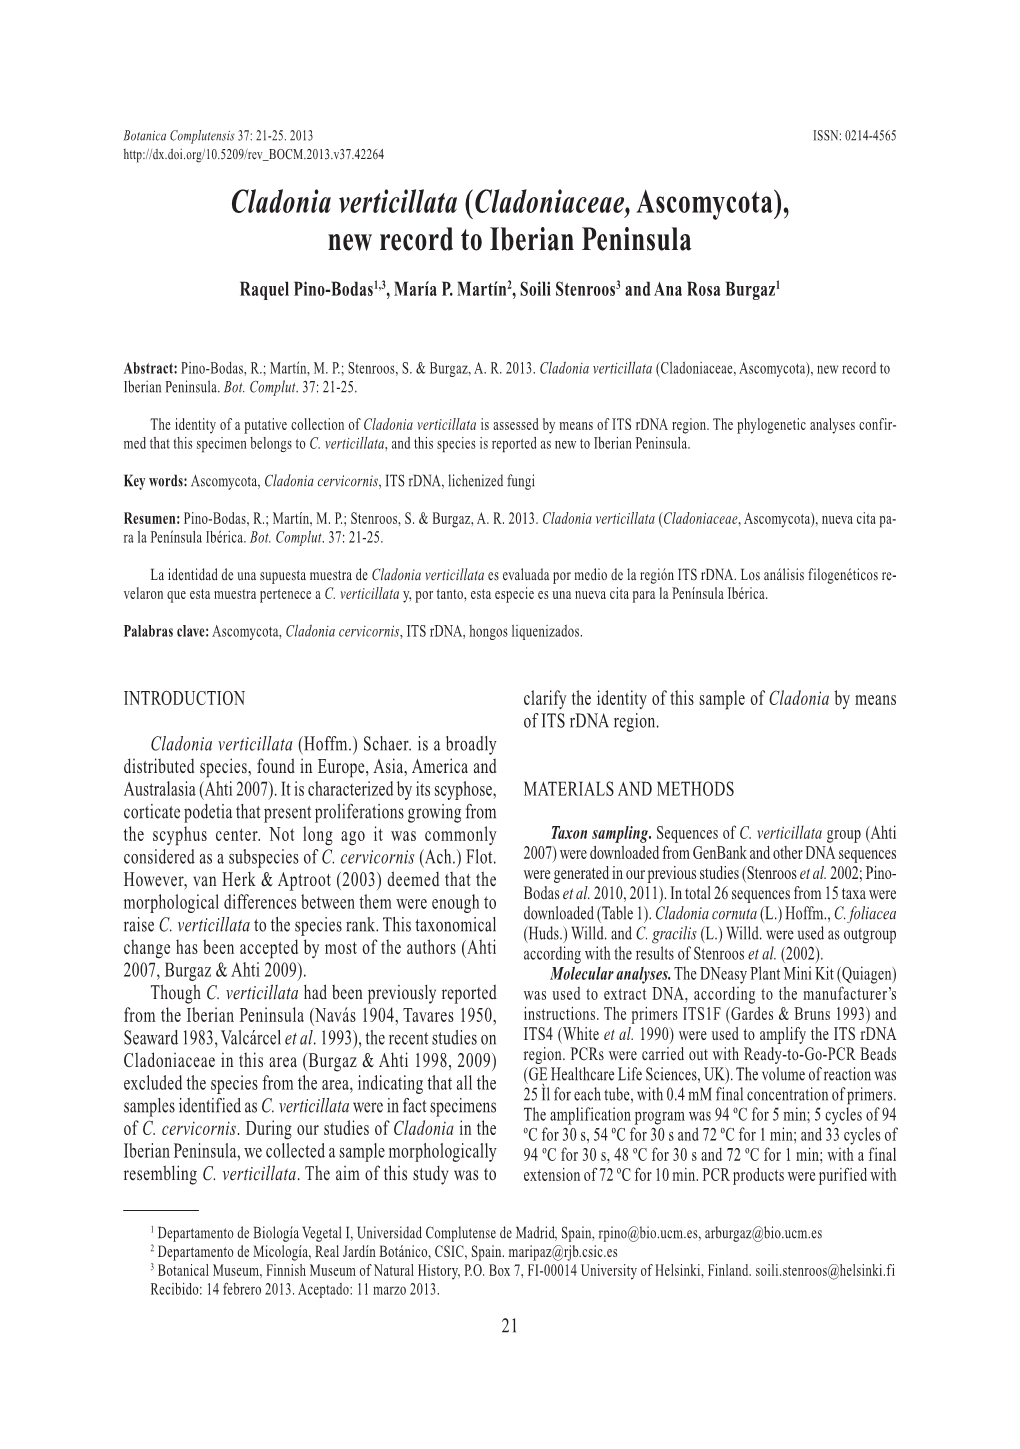 Cladonia Verticillata (Cladoniaceae, Ascomycota), New Record to Iberian Peninsula